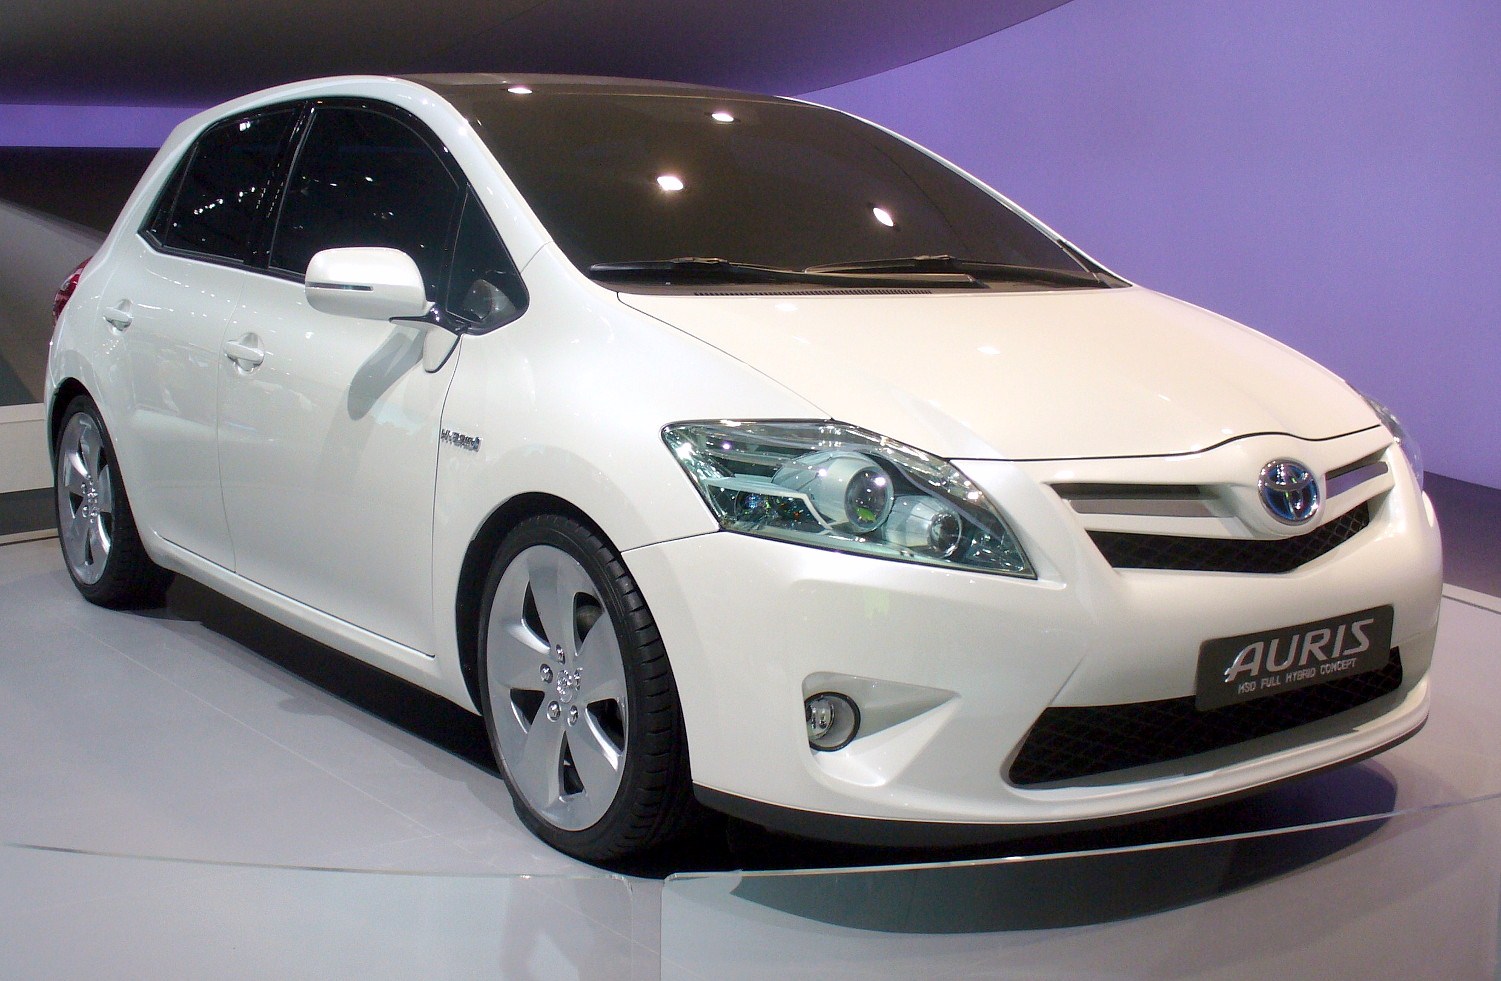 The new Toyota Auris is a British-built hybrid hatch